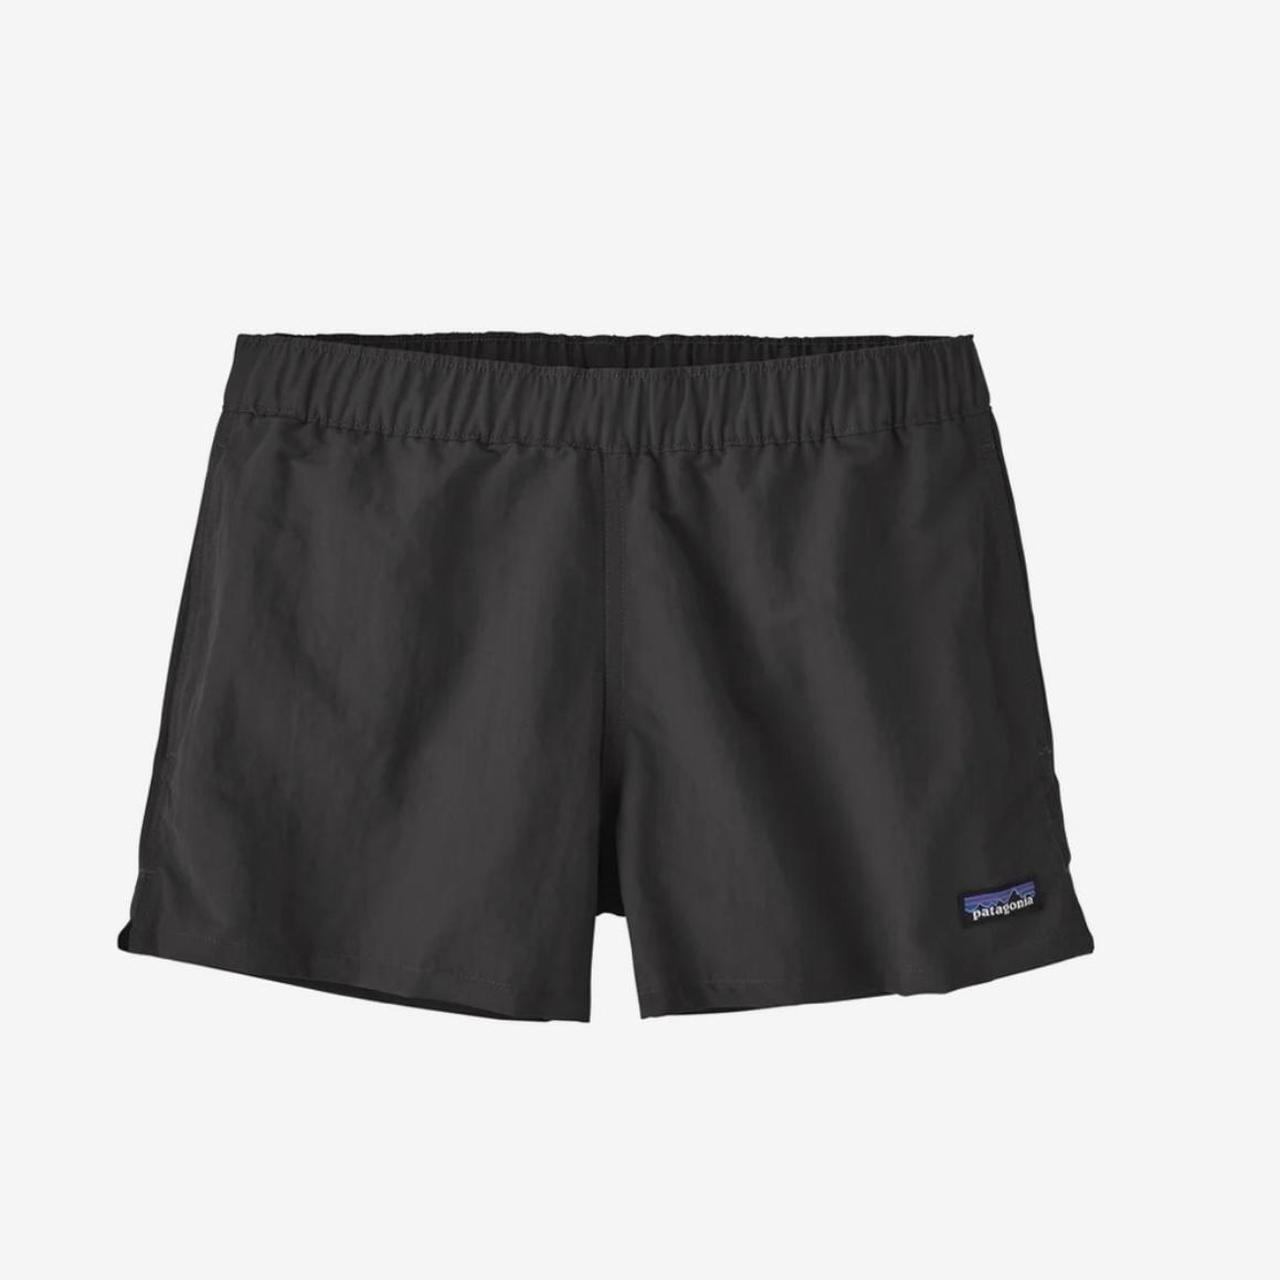 patagonia shorts, like new - Depop